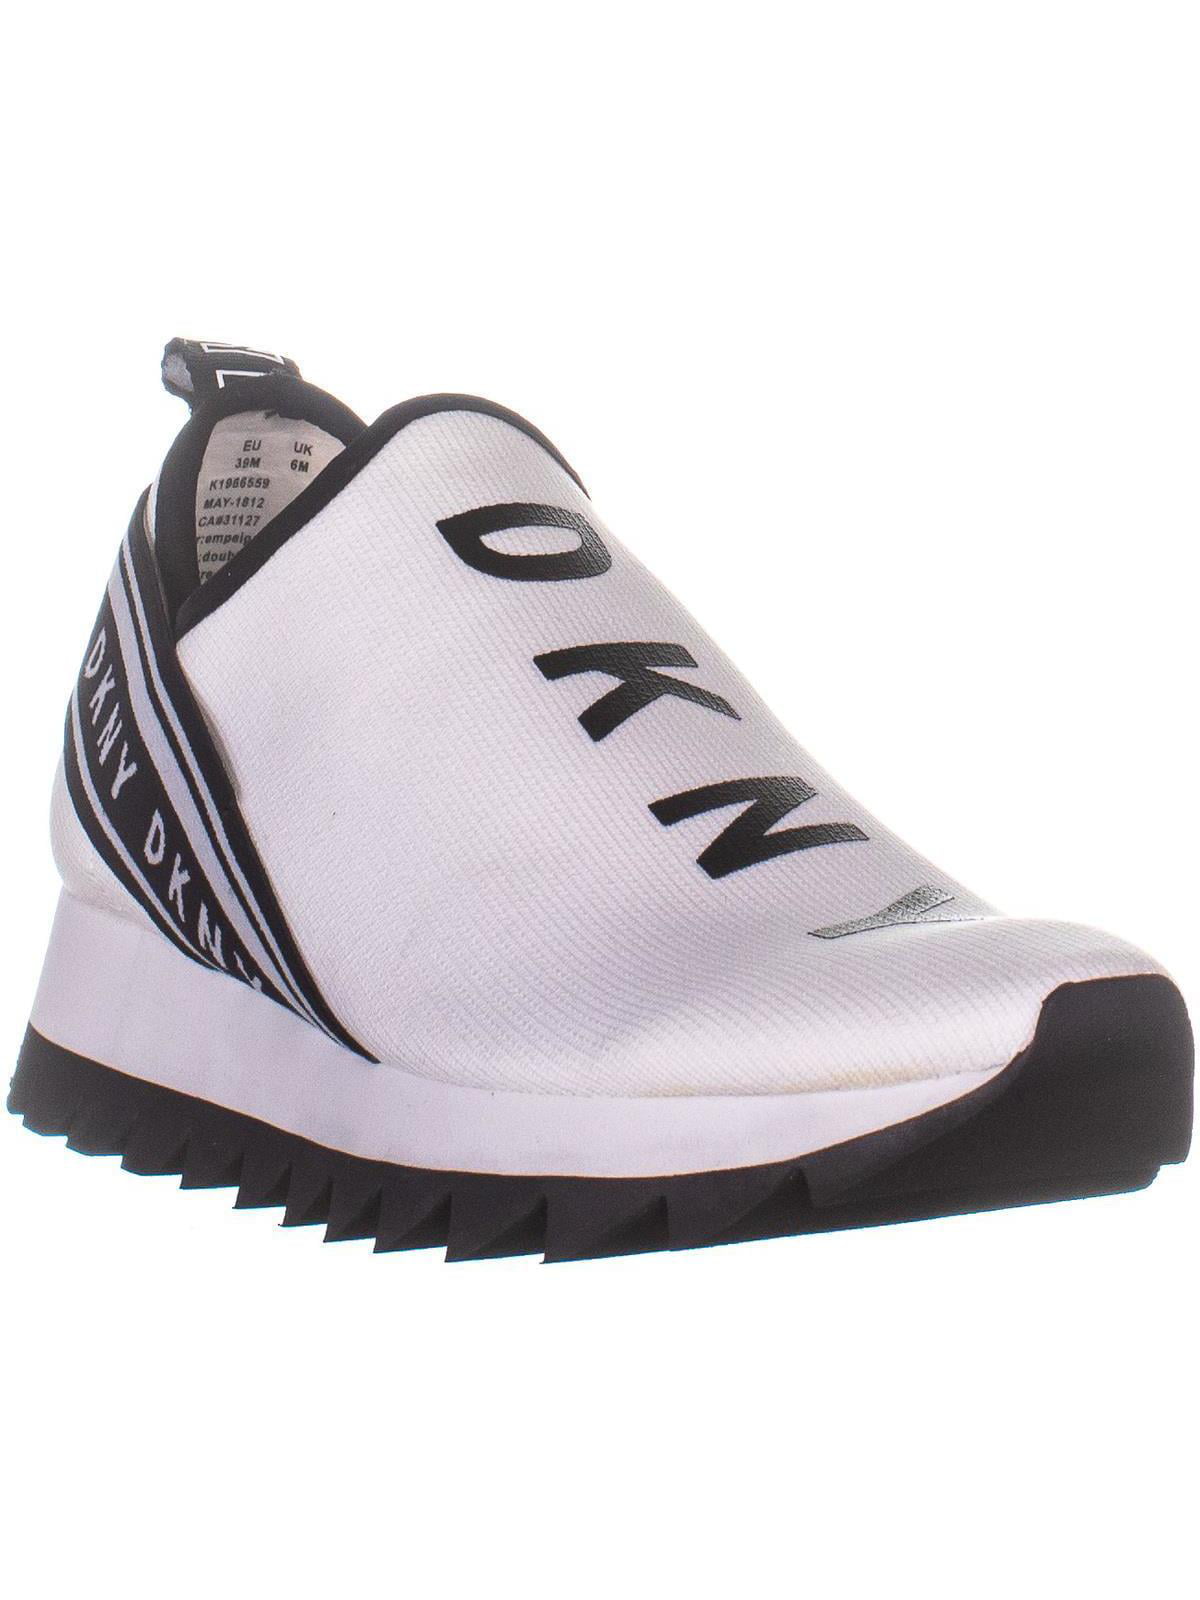 Womens DKNY Abbi Slip On Low Top Sneakers, White, 8.5 US / 39 EU